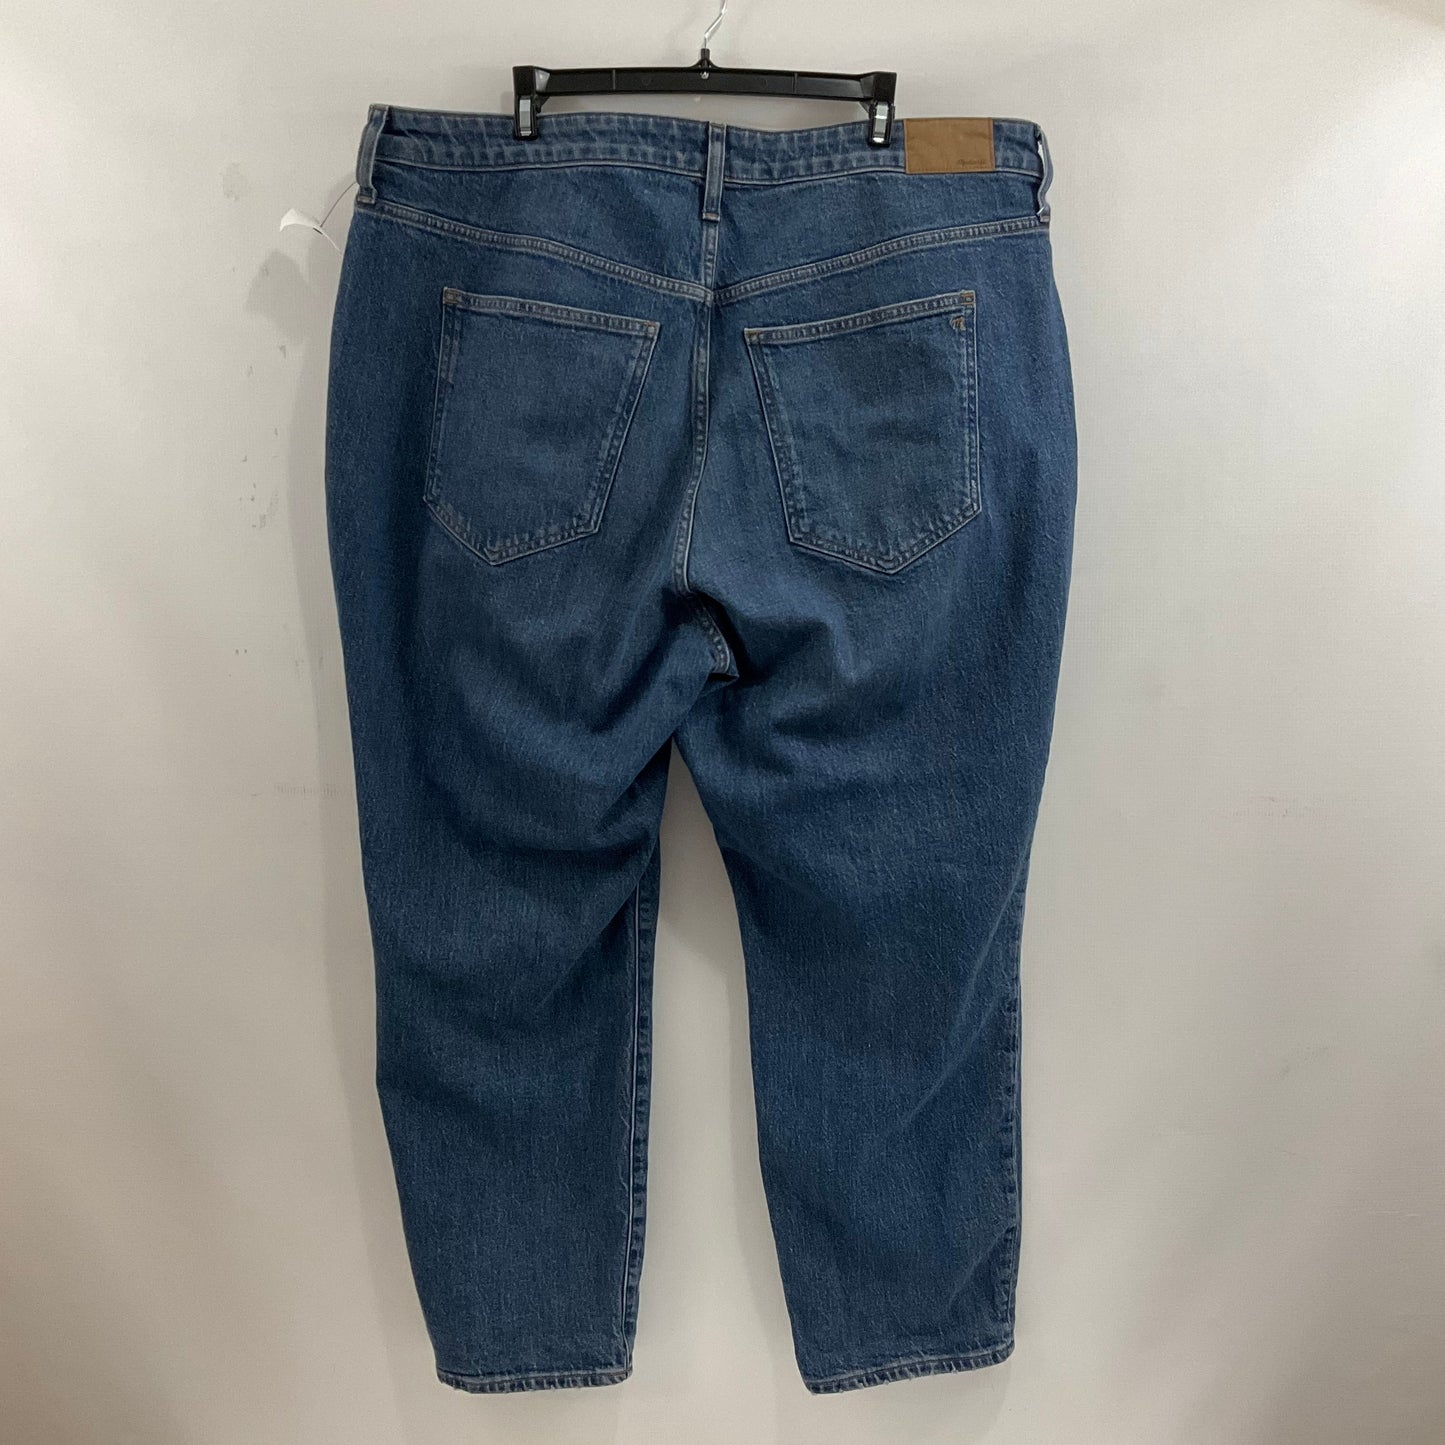 Jeans Boyfriend By Madewell  Size: 20